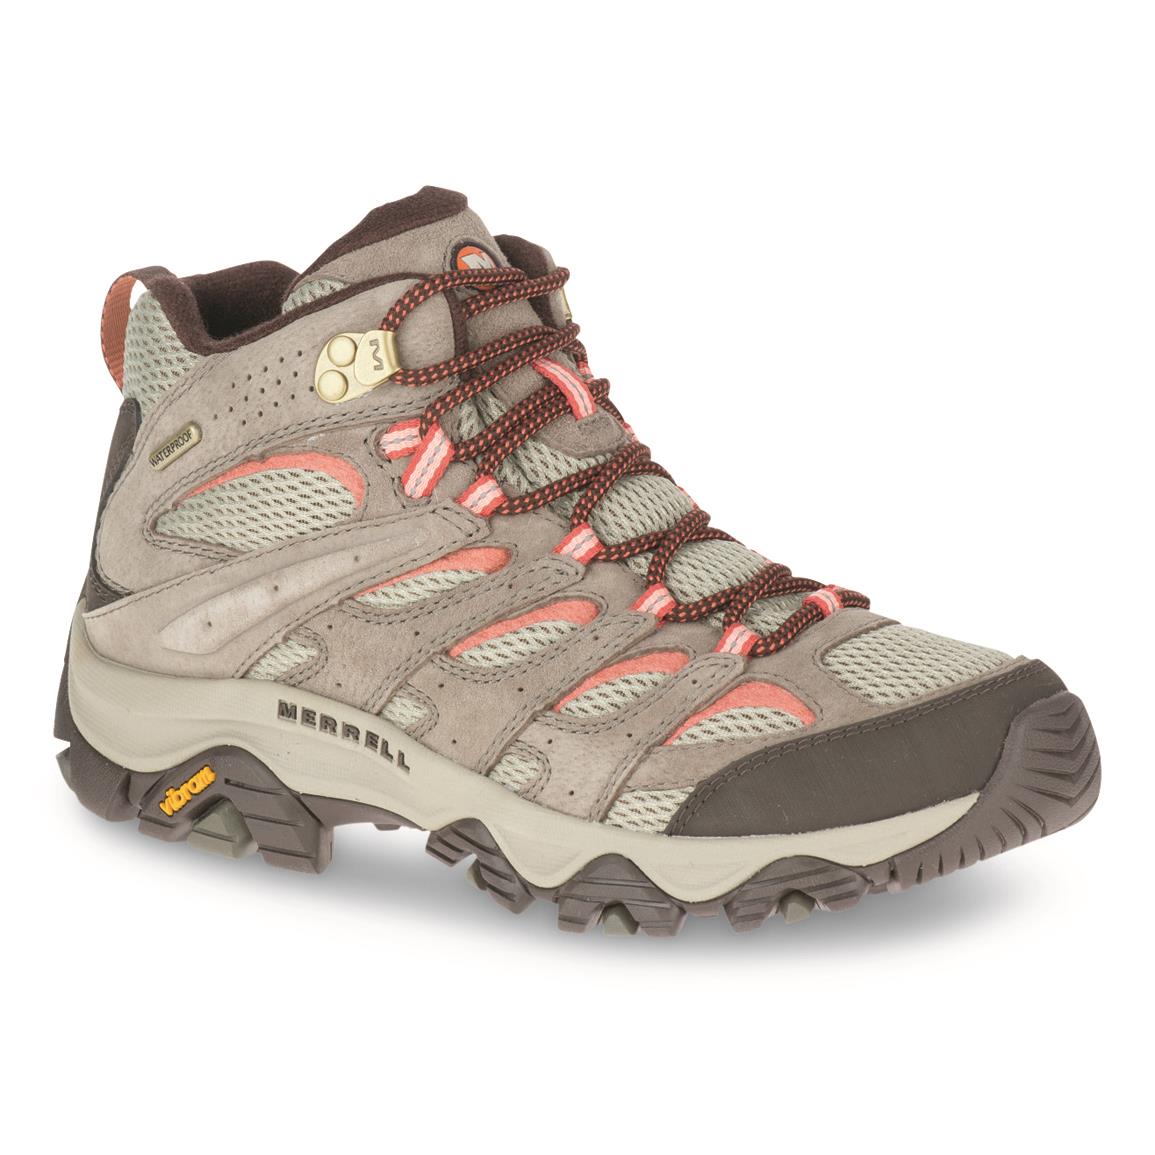 Merrell Women's Moab 3 Waterproof Hiking Boots, Bungee Cord